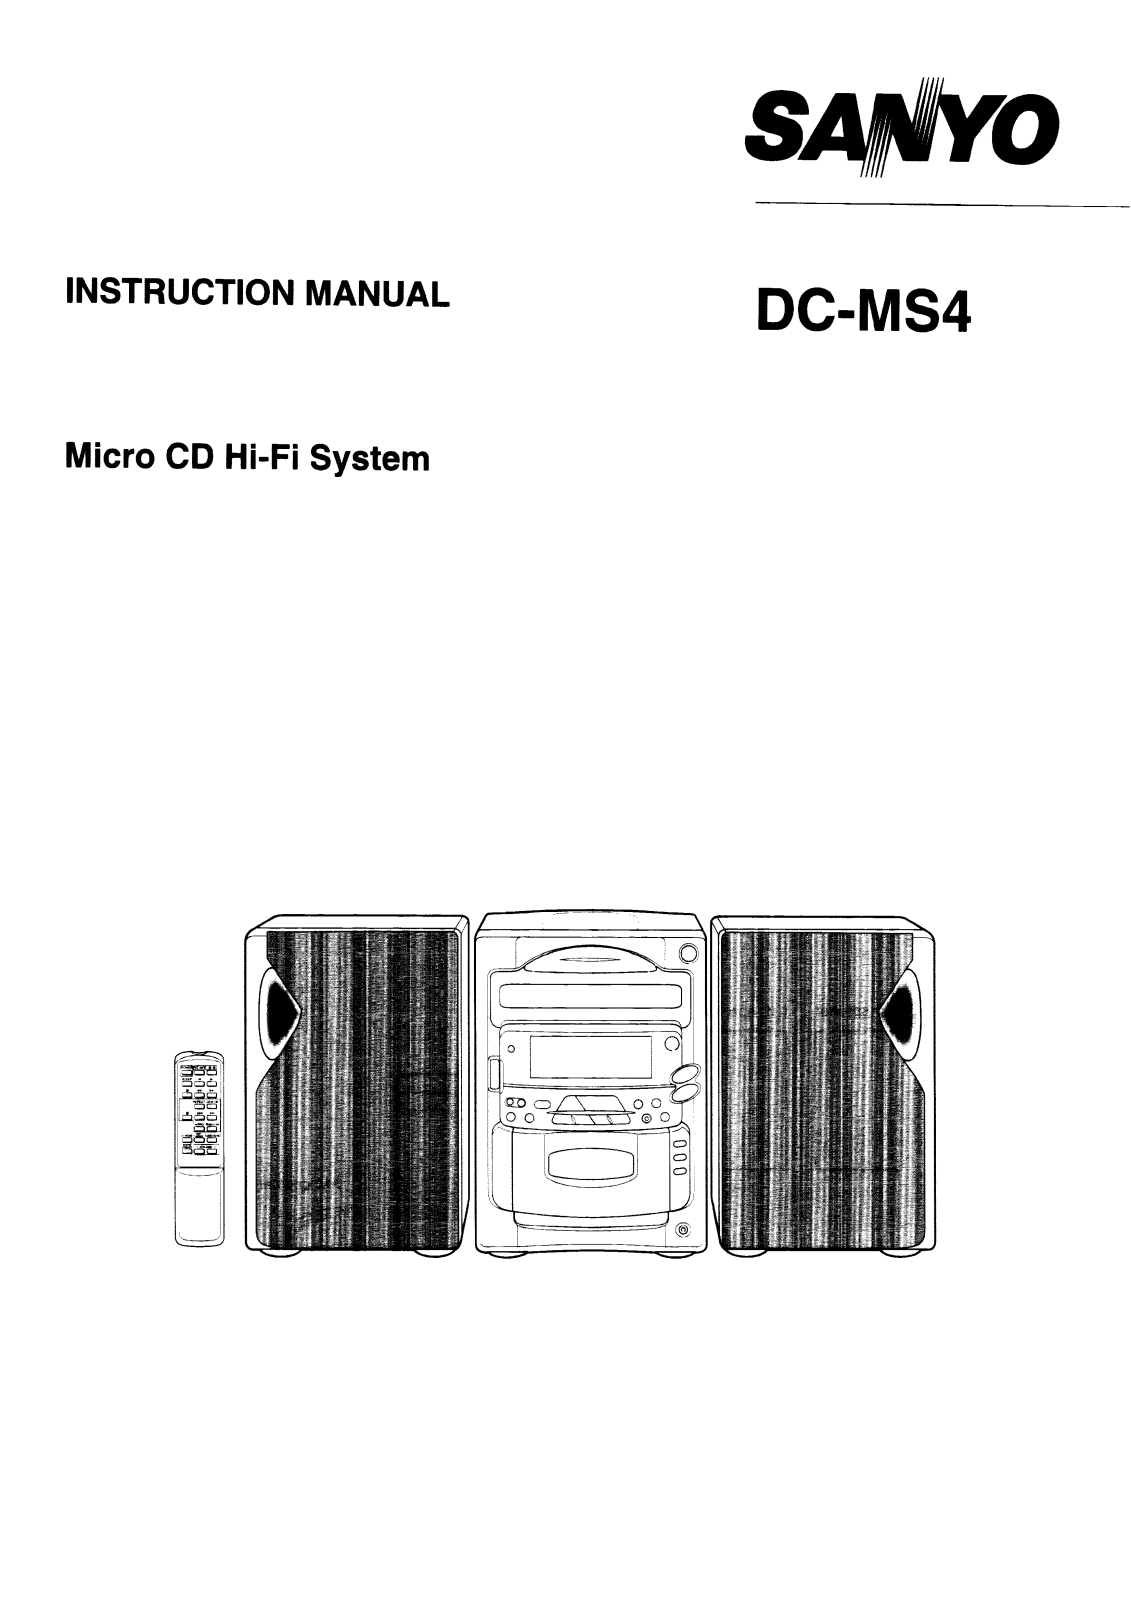 Sanyo DC-MS4 Instruction Manual